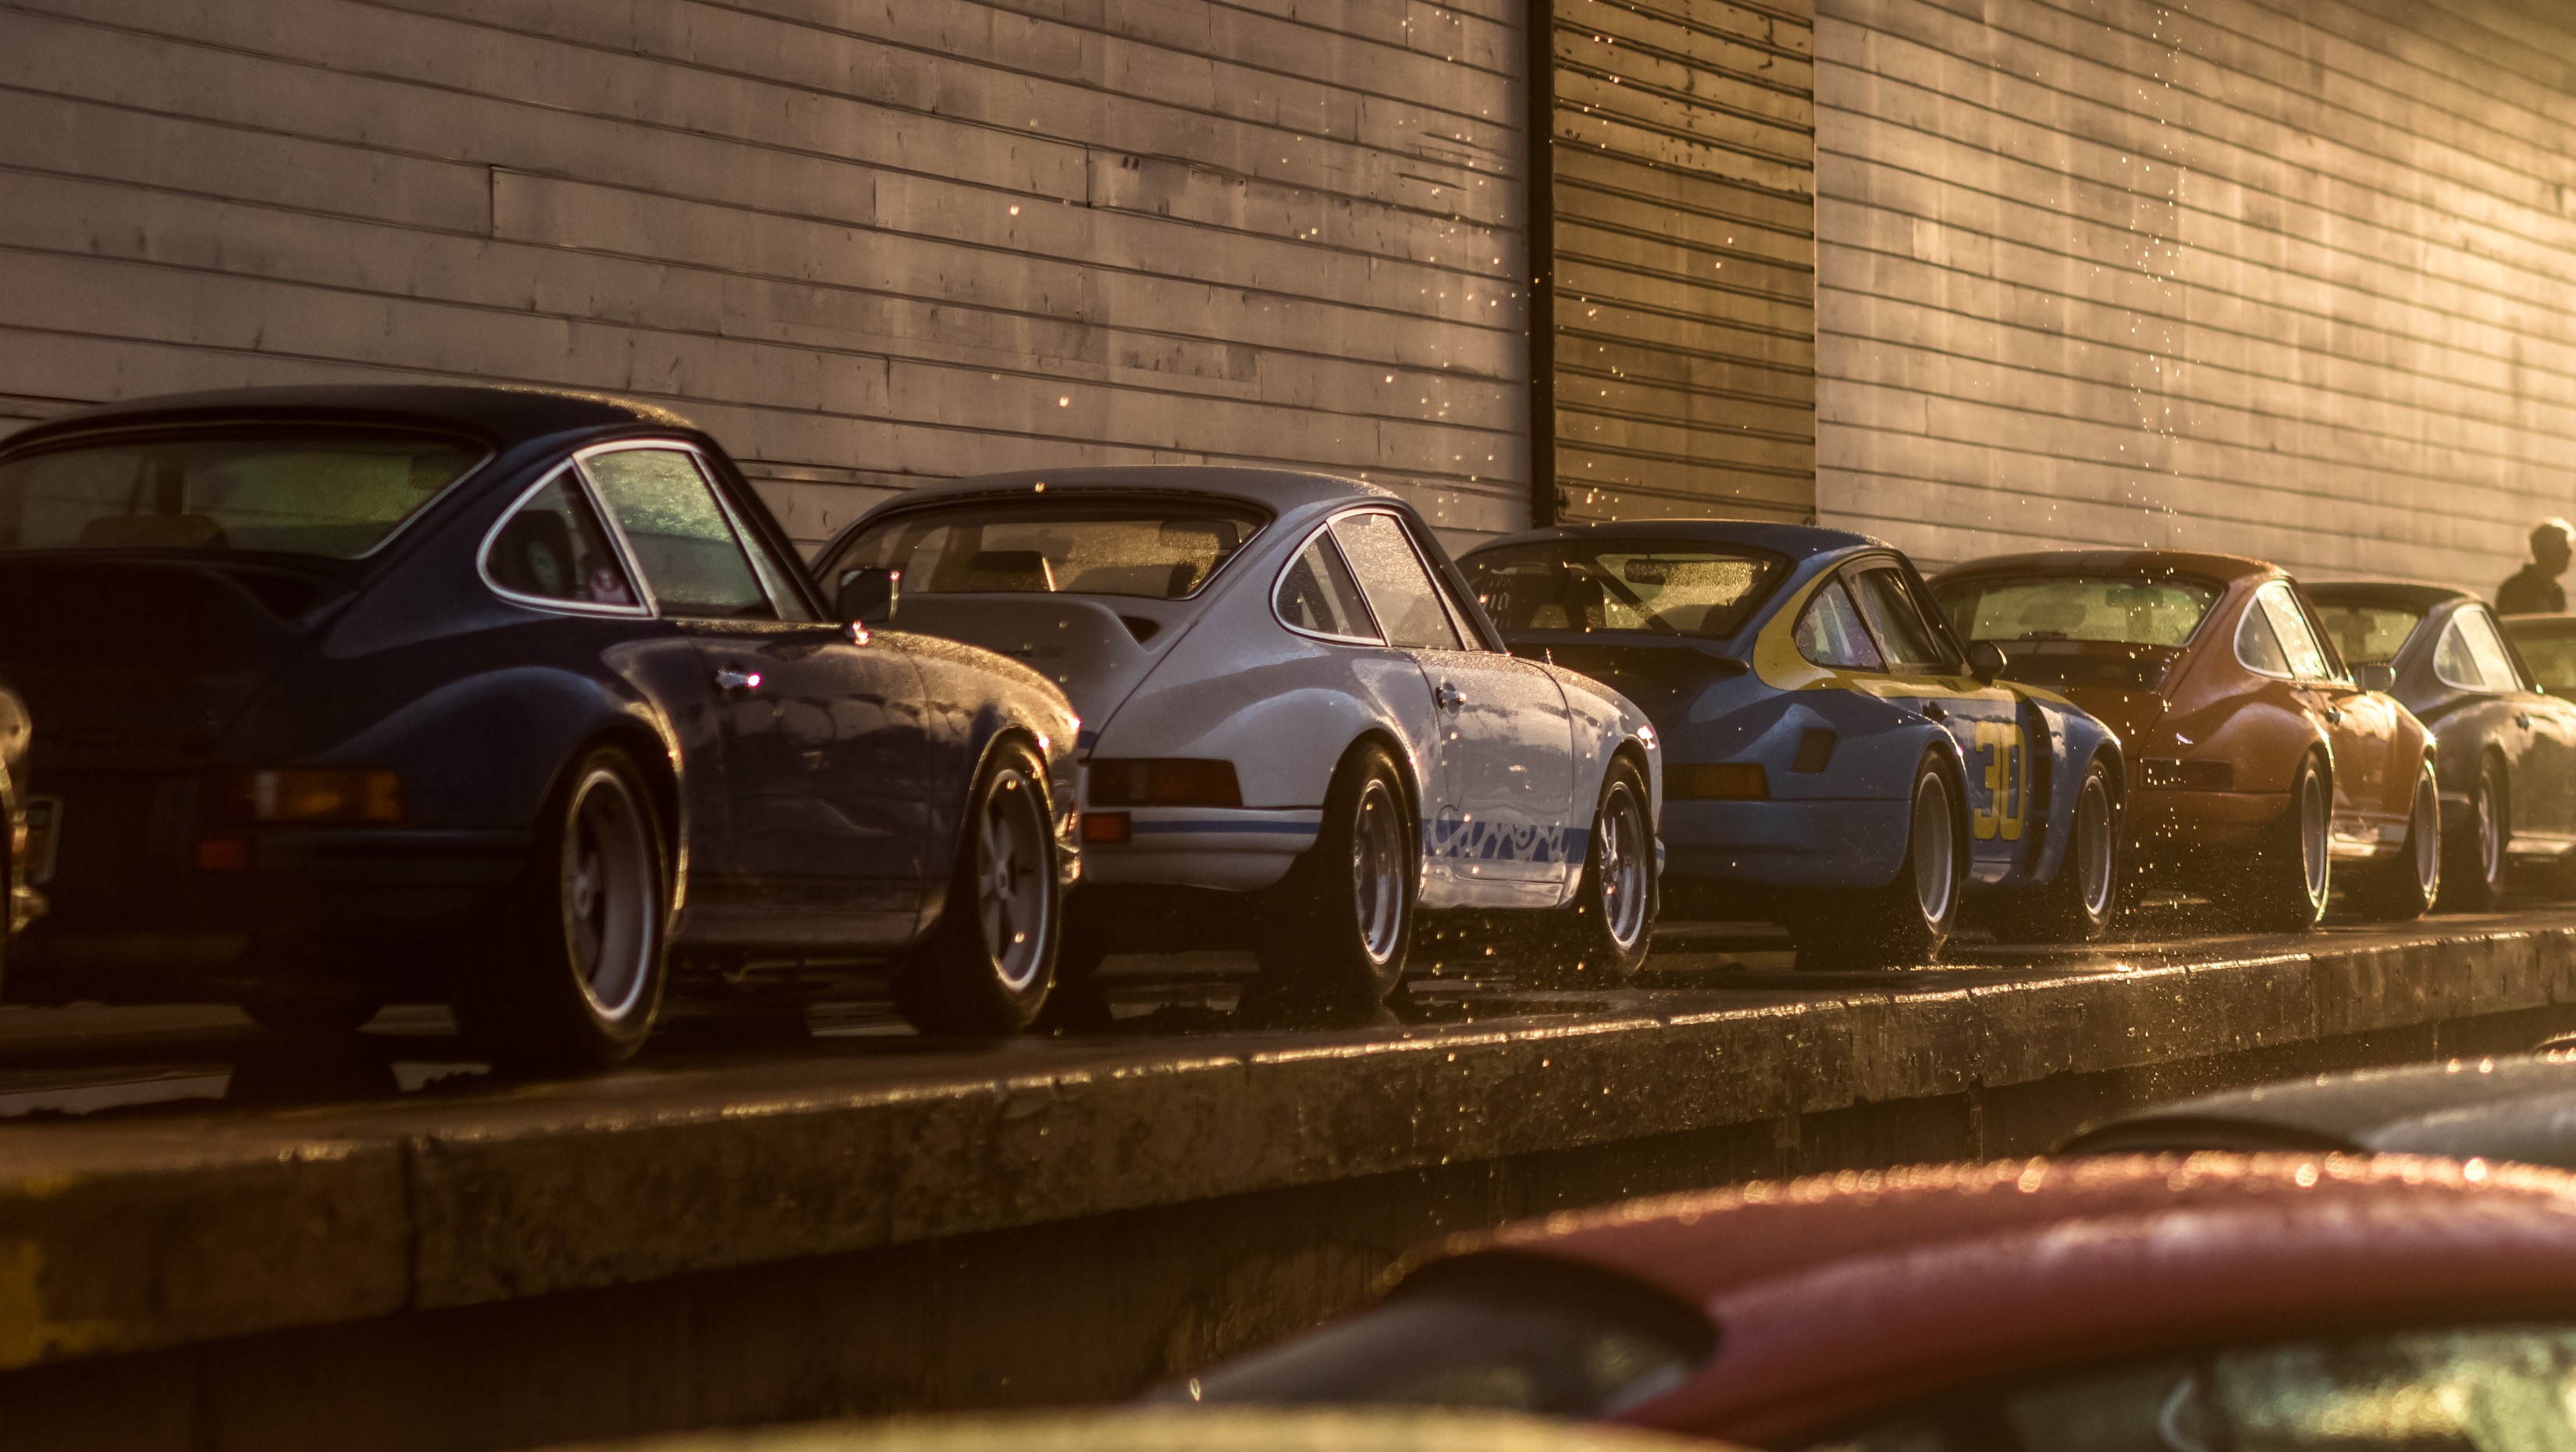 Line-up of classic Porsche sportscars in the rain